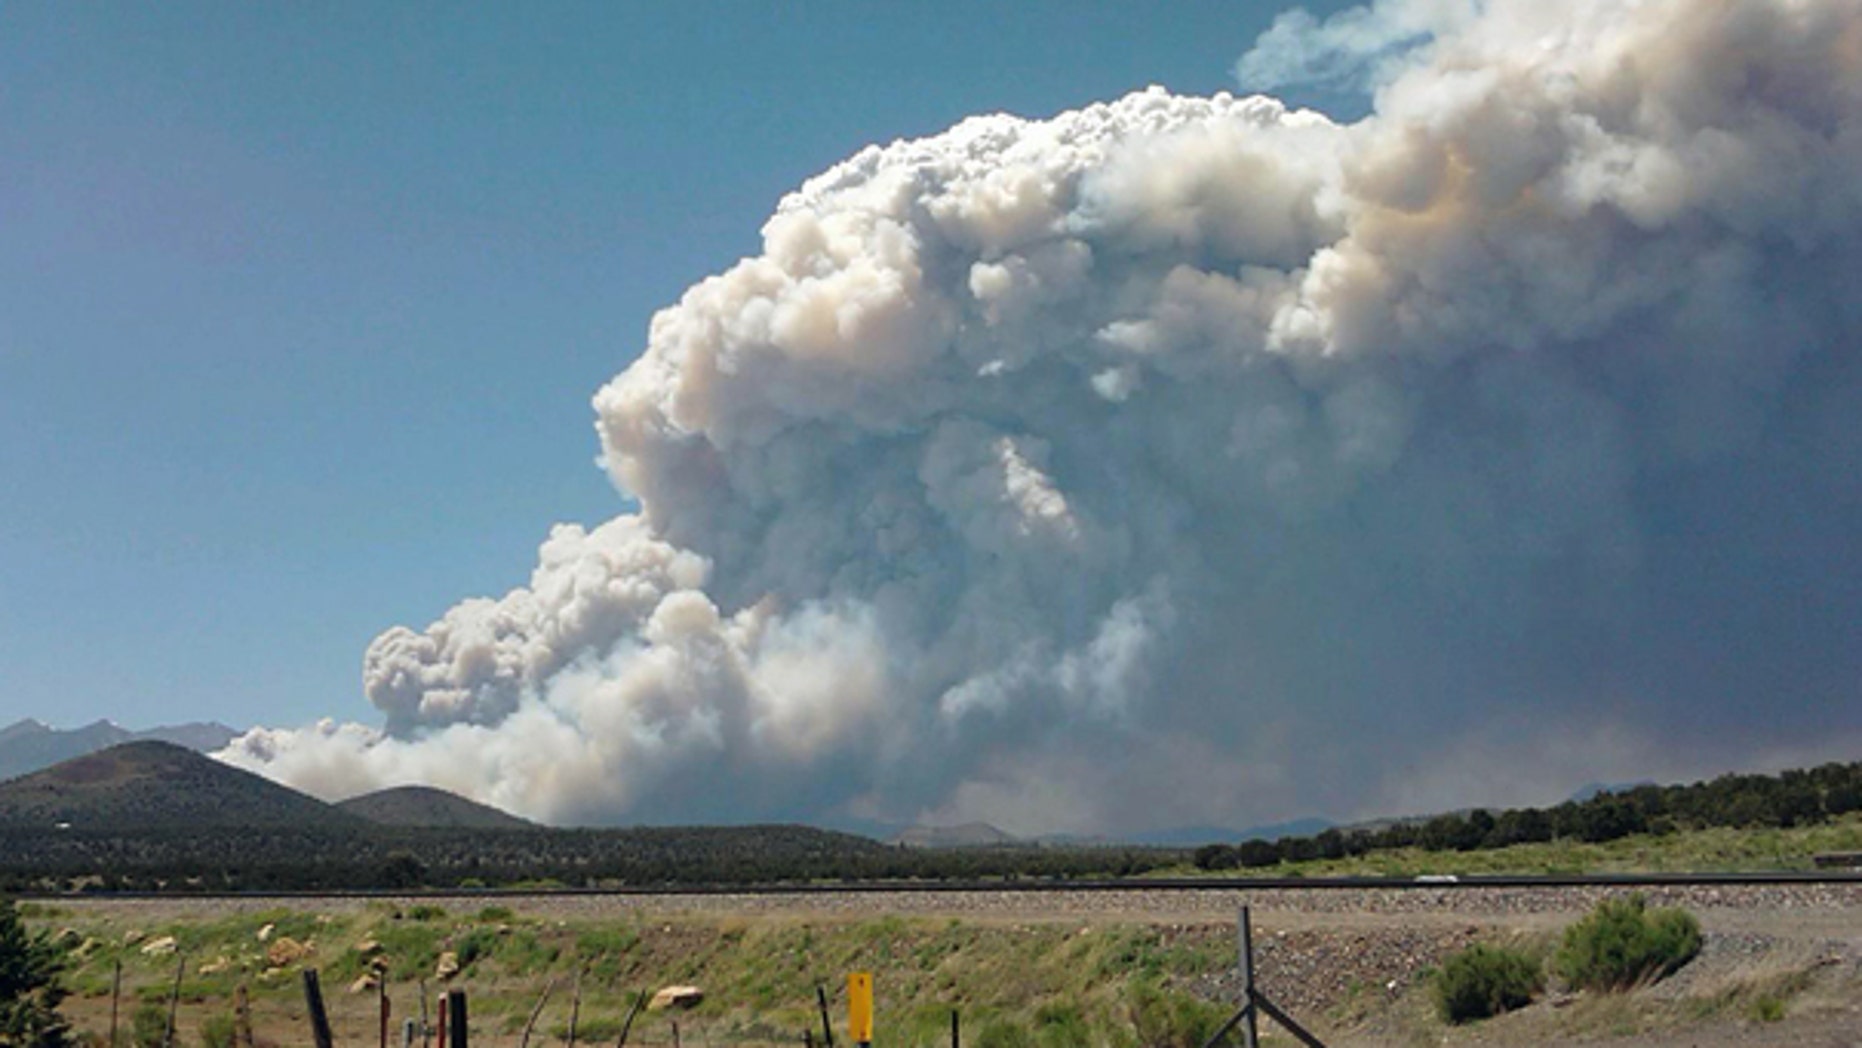 Winds a Challenge for Crews Battling Arizona Wildfire Fox News